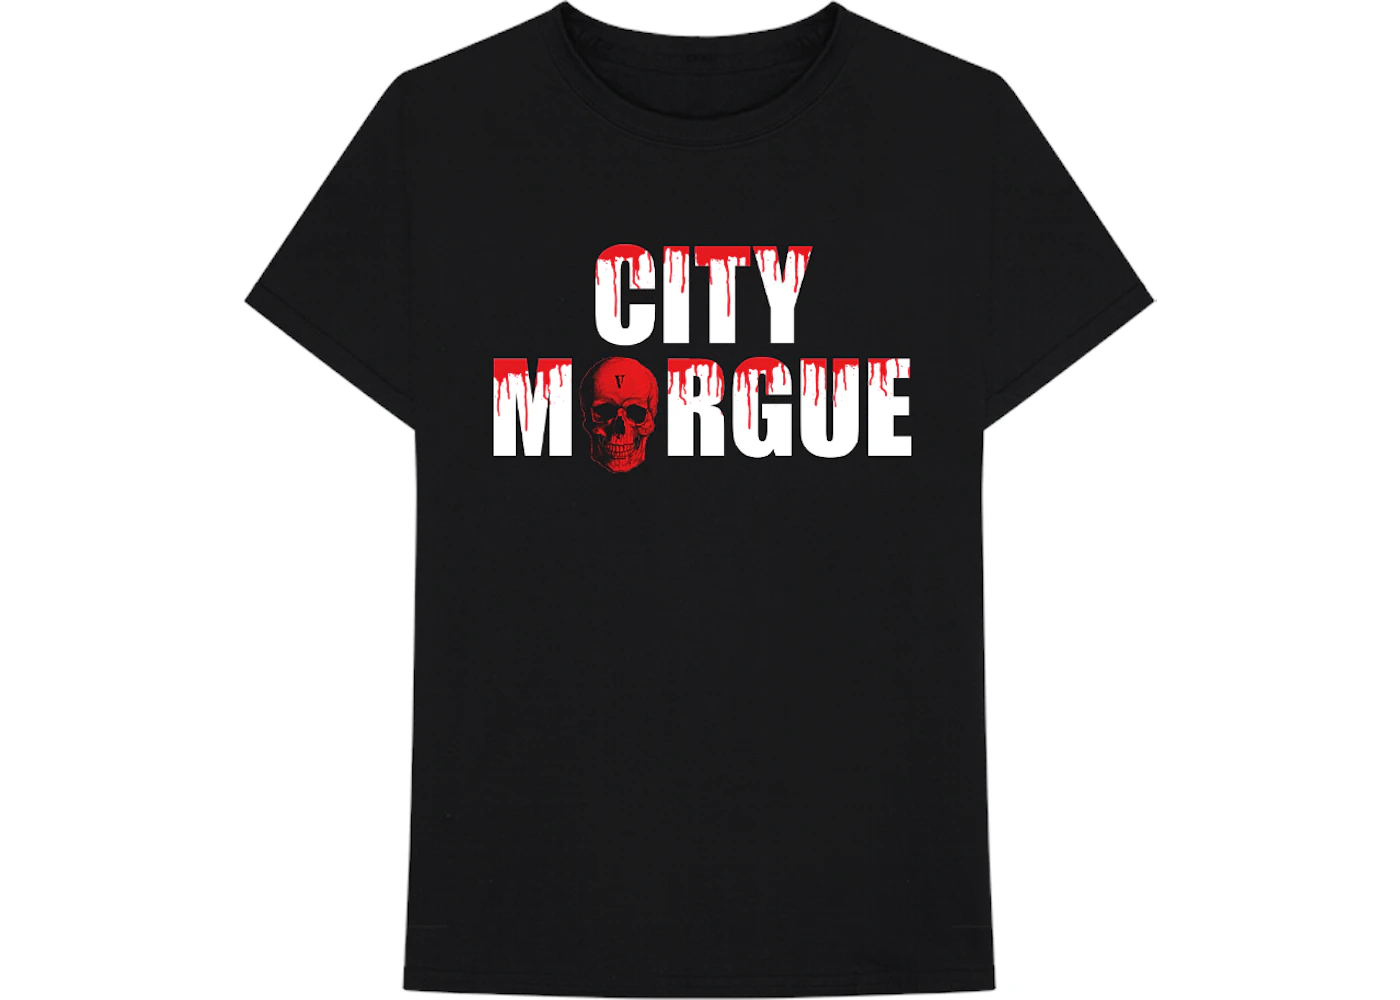 City Morgue x Vlone Dogs Tee Black Men's - FW19 - US